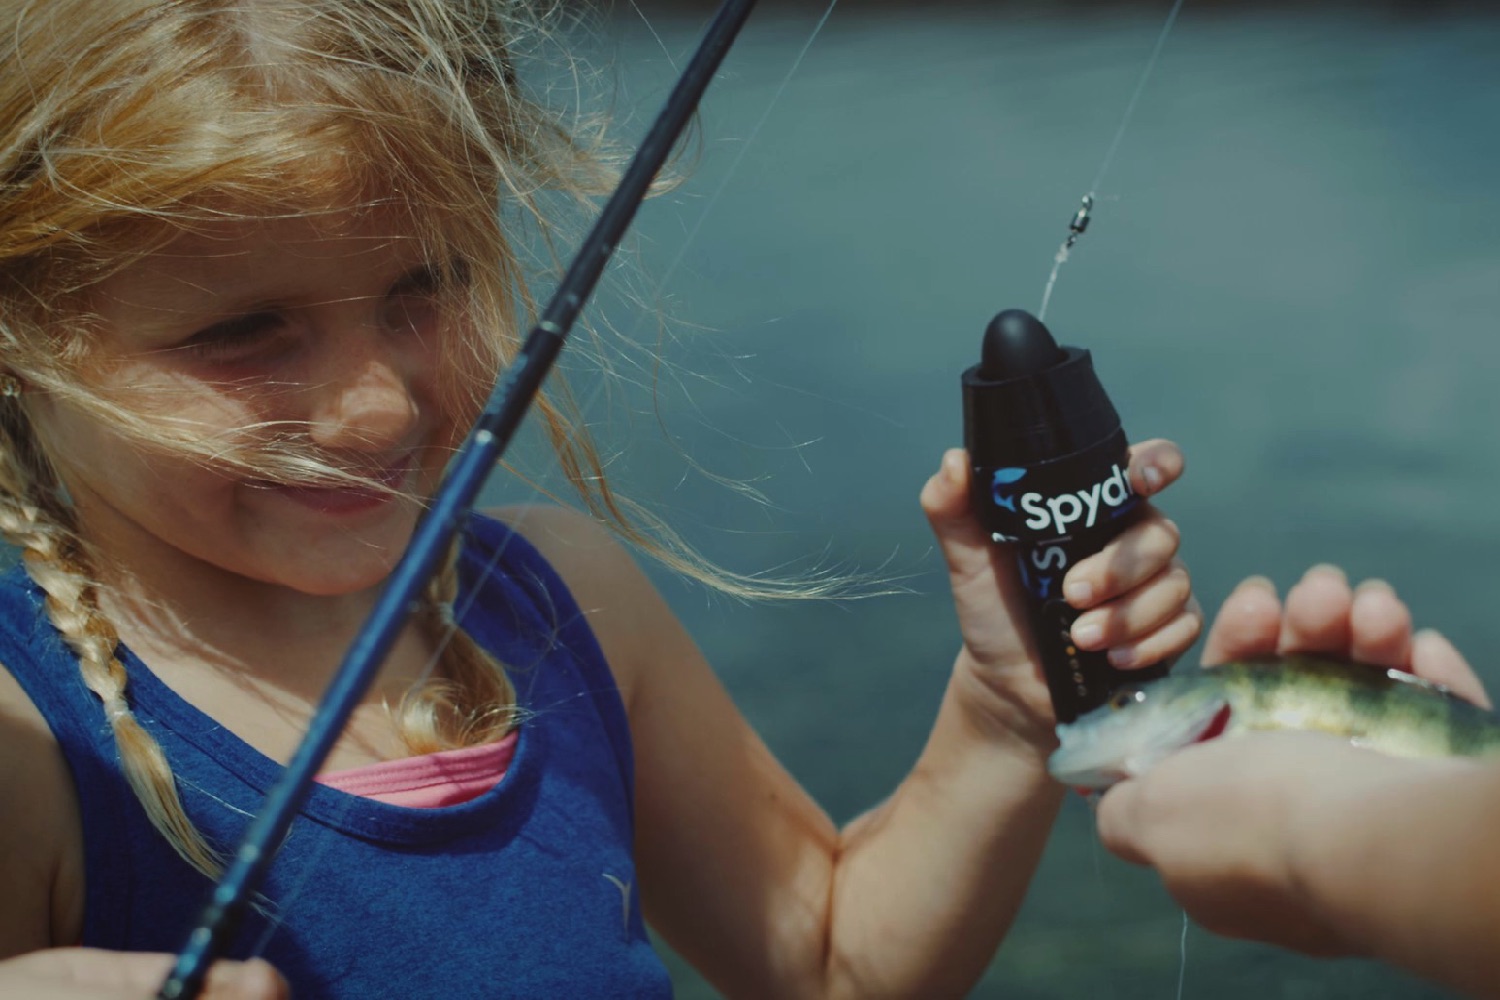 Spydro Fishing Camera – More Than Smart Fishing Camera